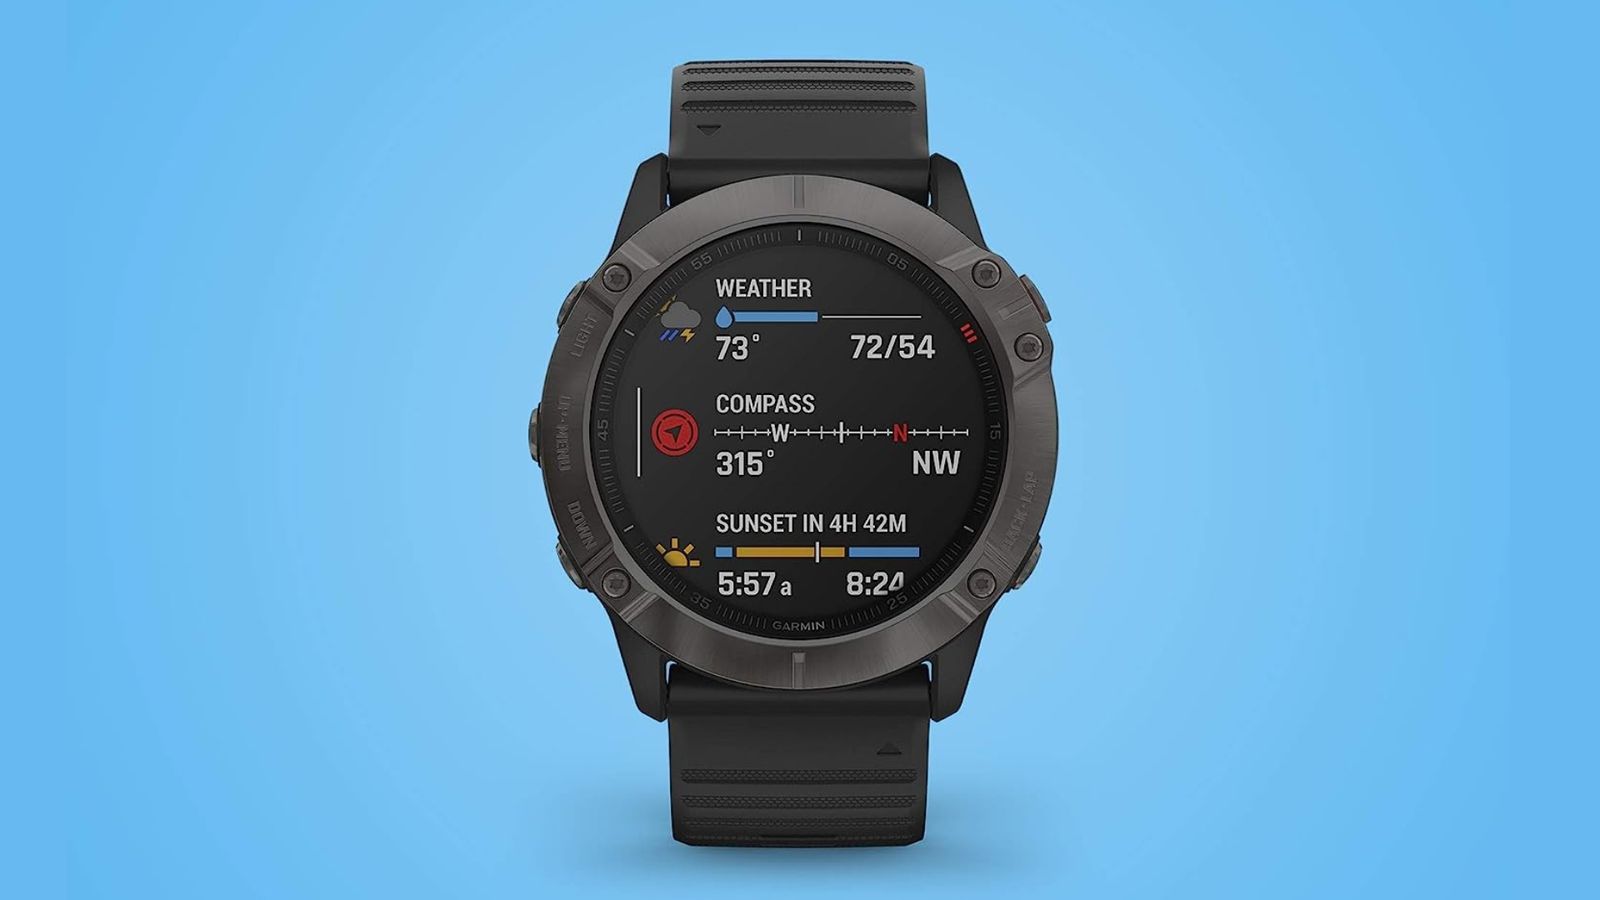 Garmin fēnix 6X product image of a black smartwatch on a blue background.